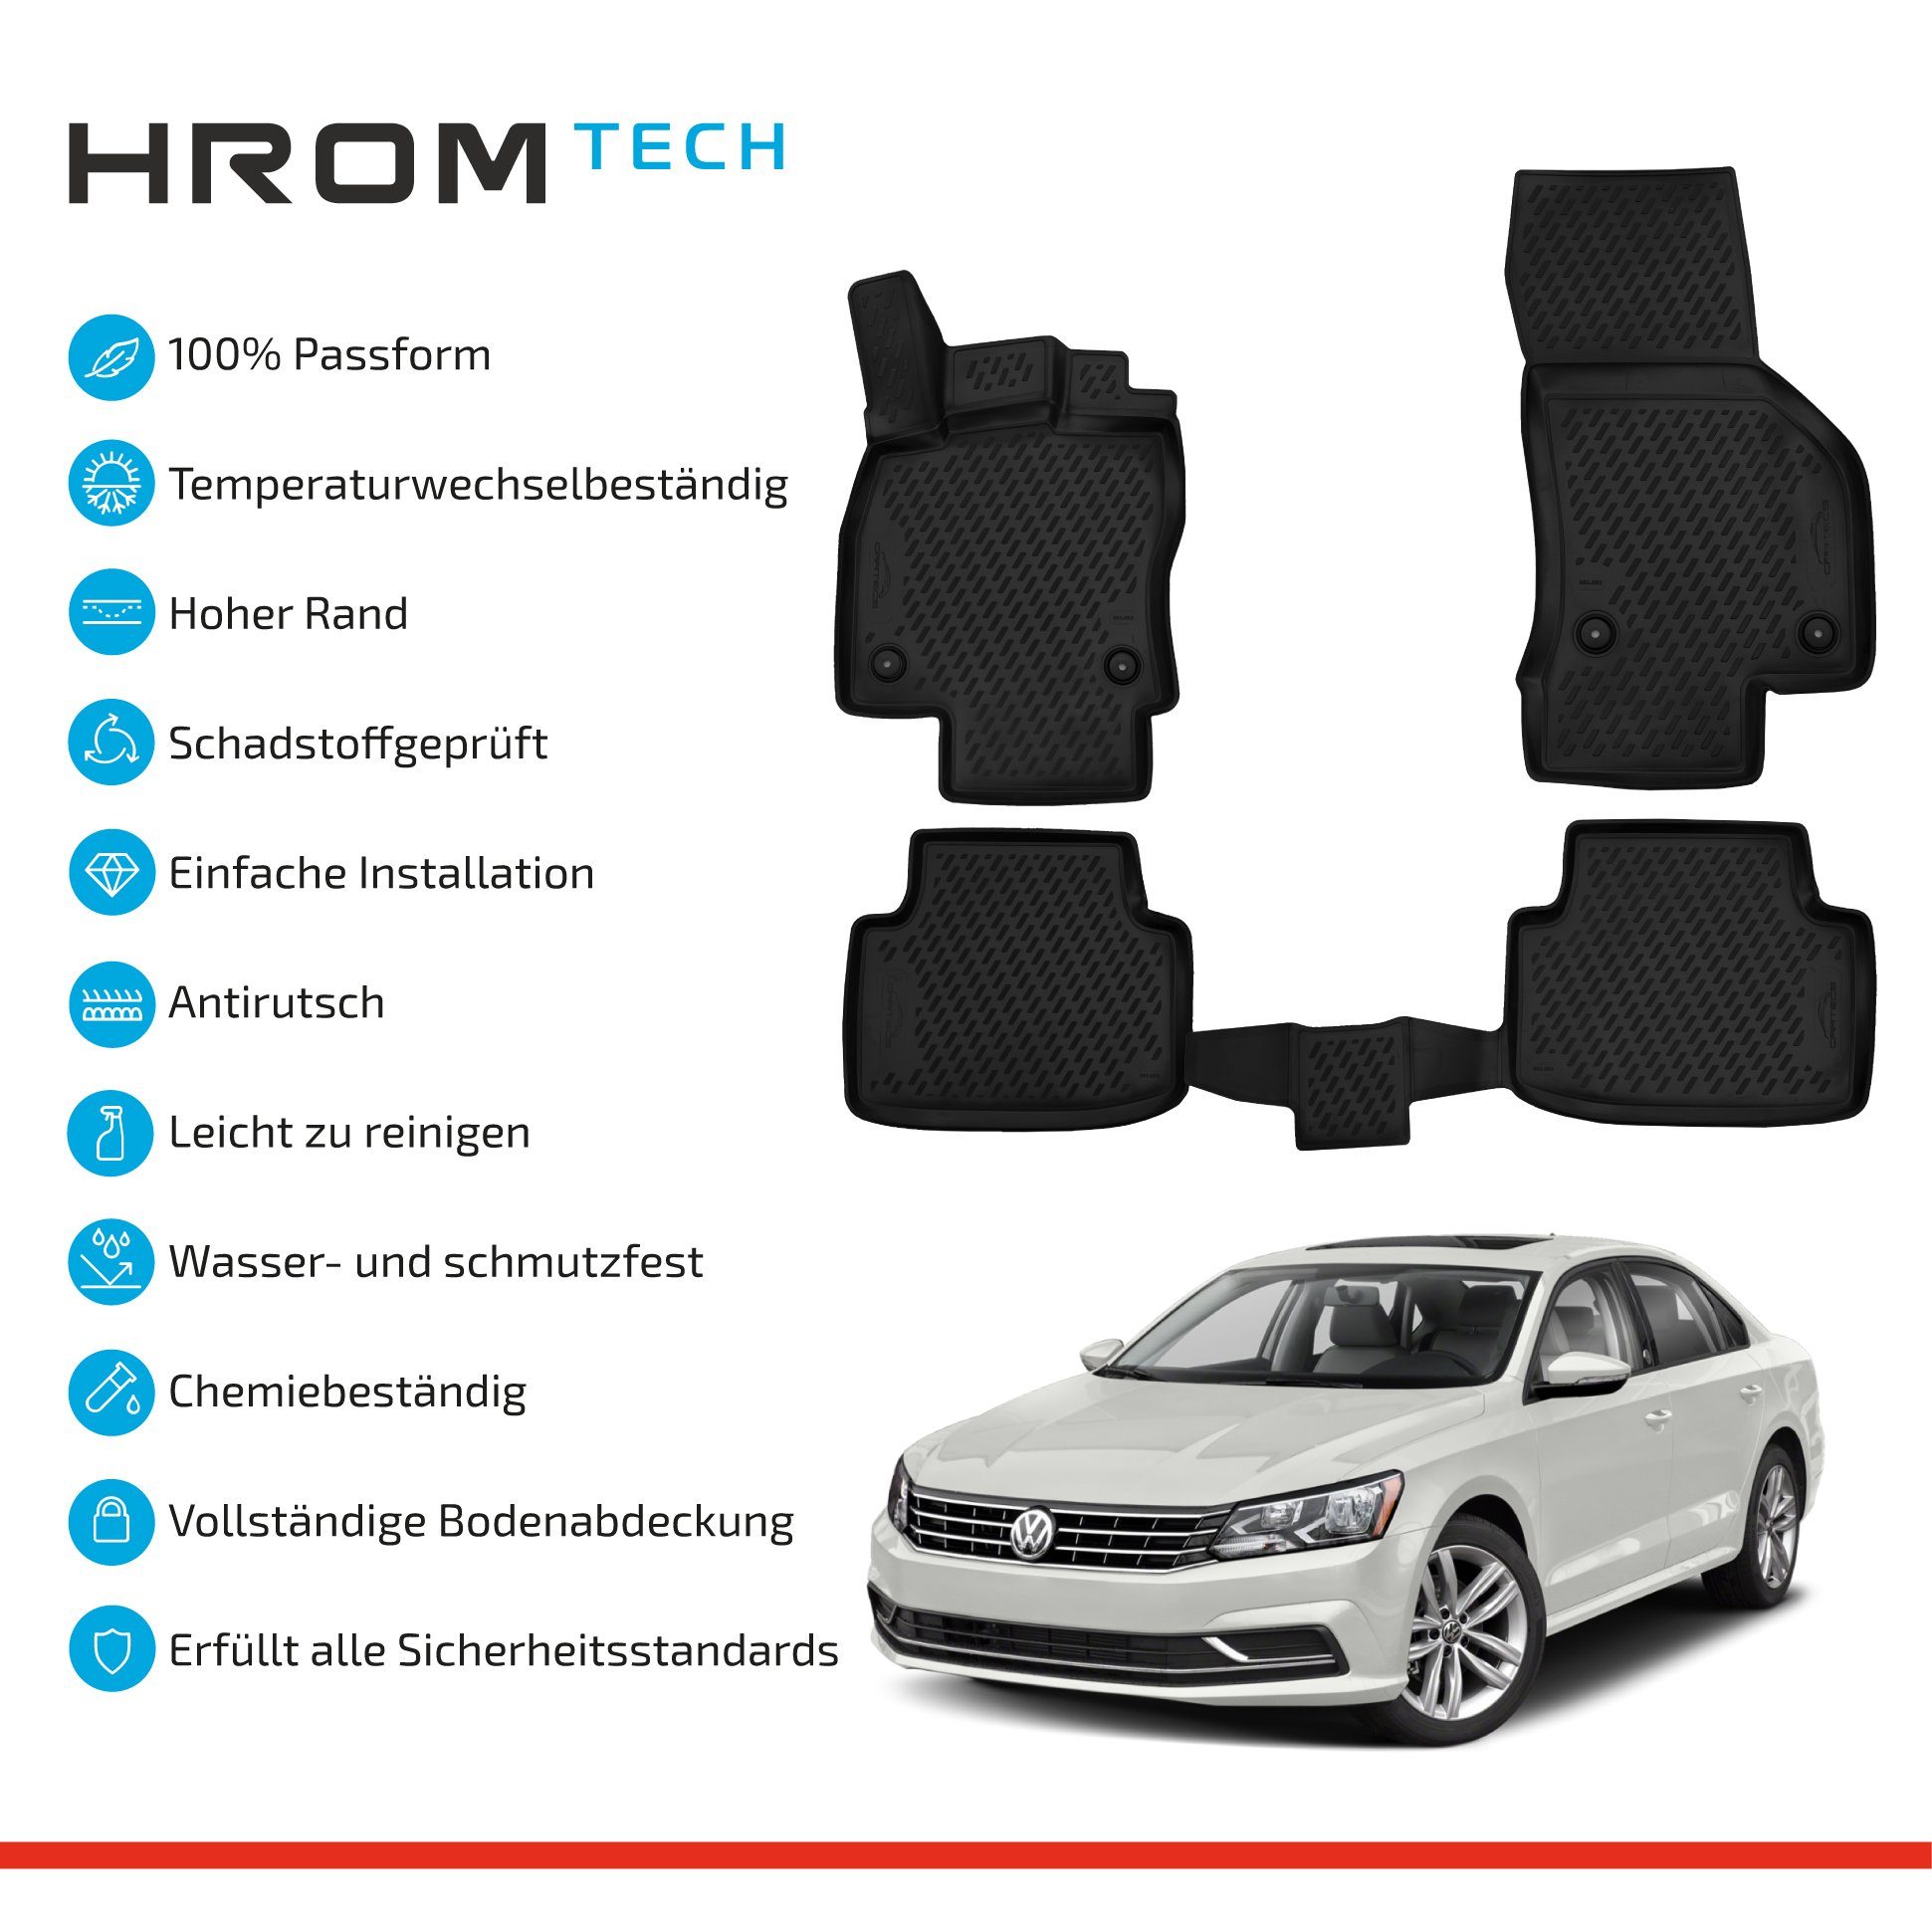 LEMENT Auto-Fußmatten Passgenaue 3D ELEMENT Fussmatten für VW Passat  B8,Limo./ Kombi,2015->, für VW Passat B8 PKW, Passgenaue